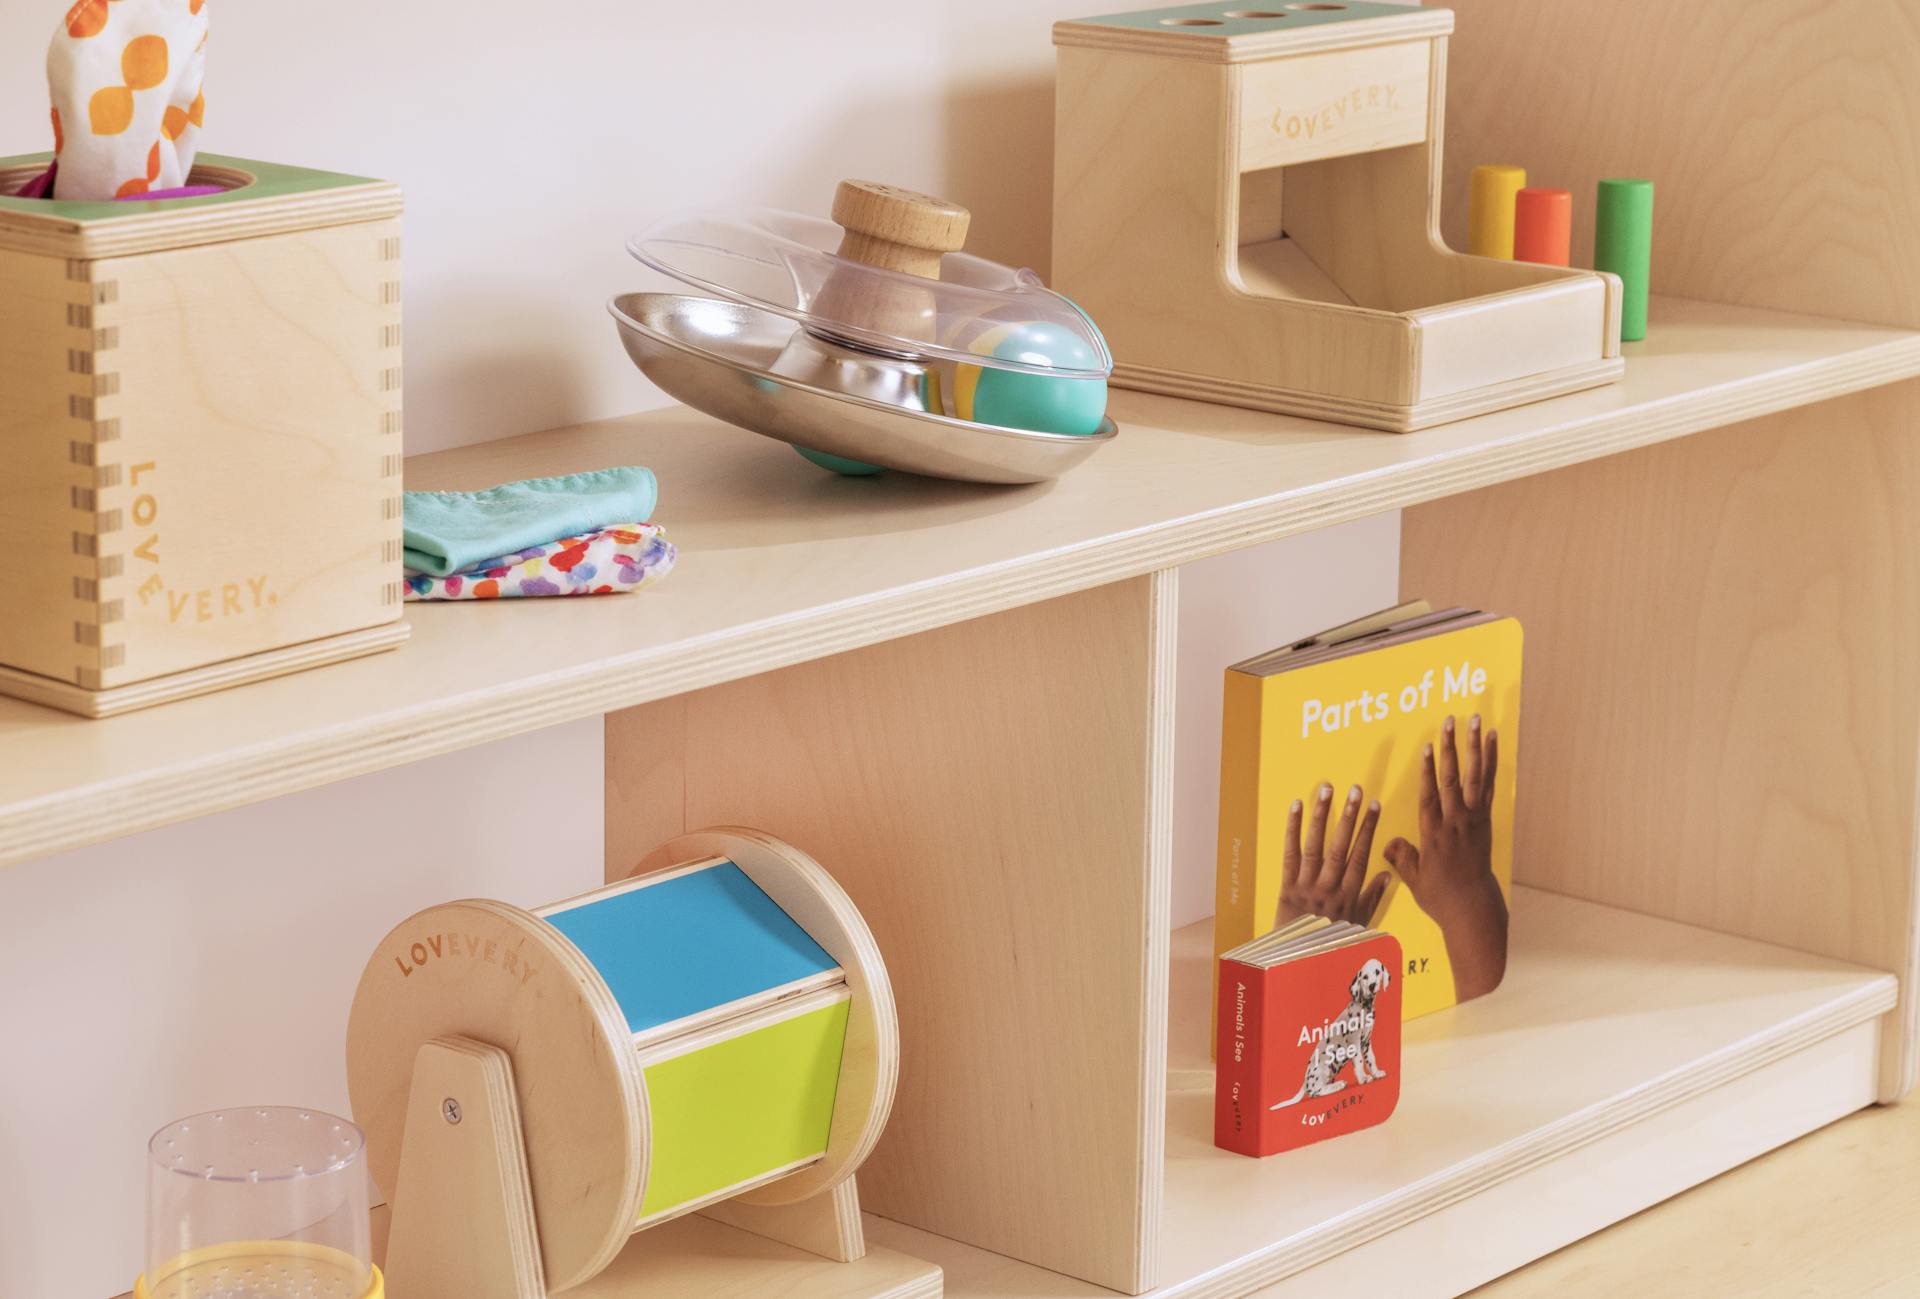 The Montessori Playshelf by Lovevery